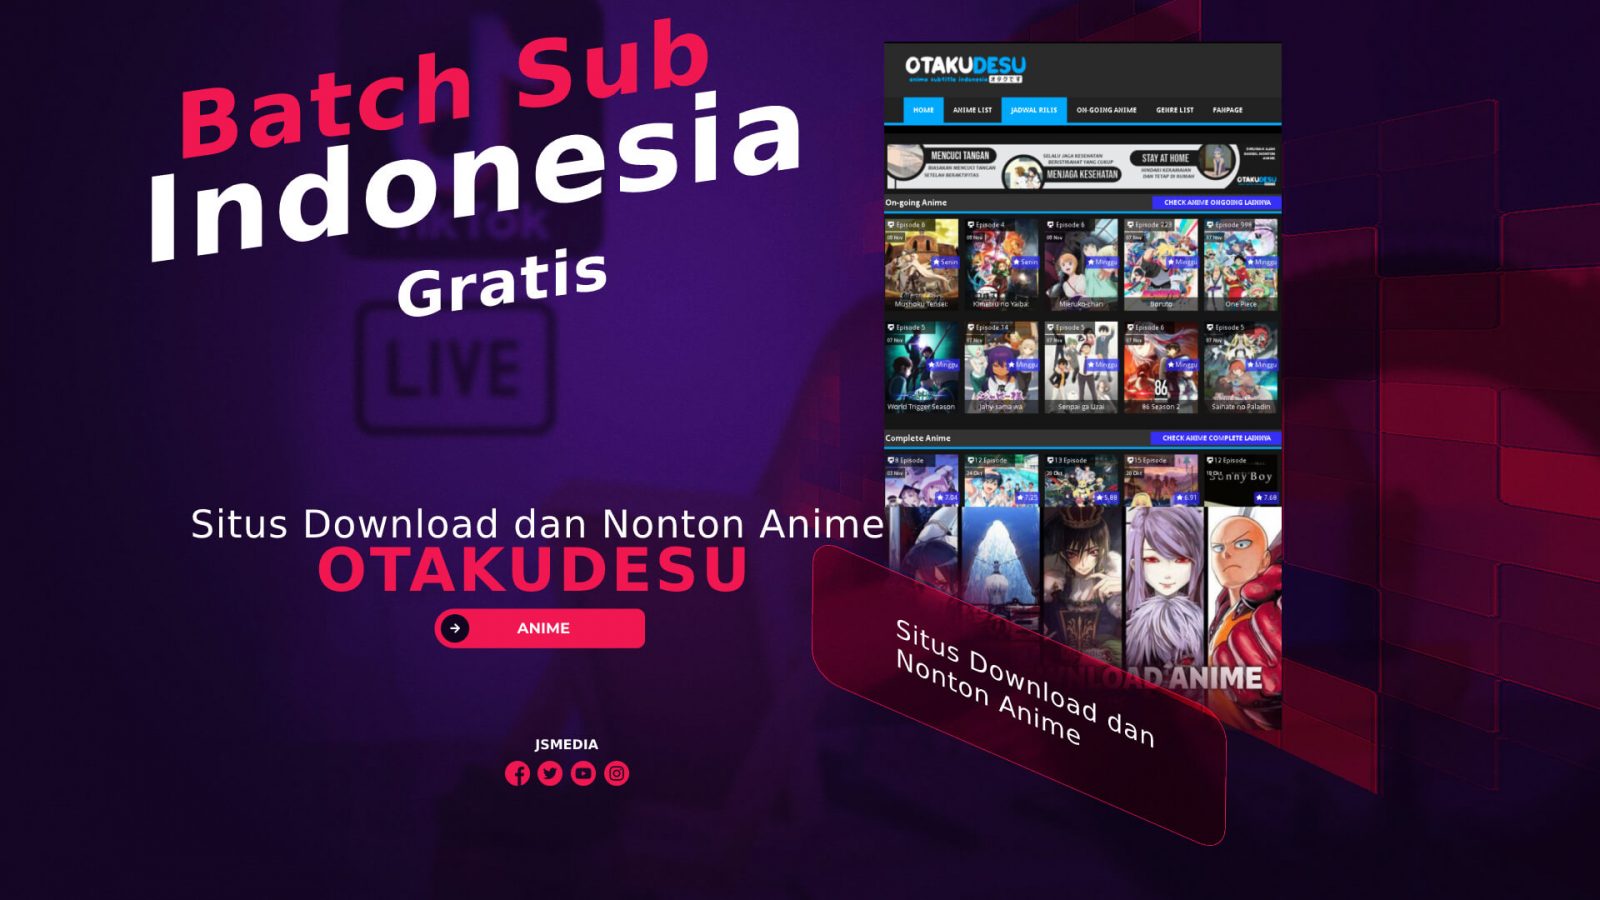 Otakudesu: Situs Download dan Nonton Anime Batch Sub Indonesia Gratis